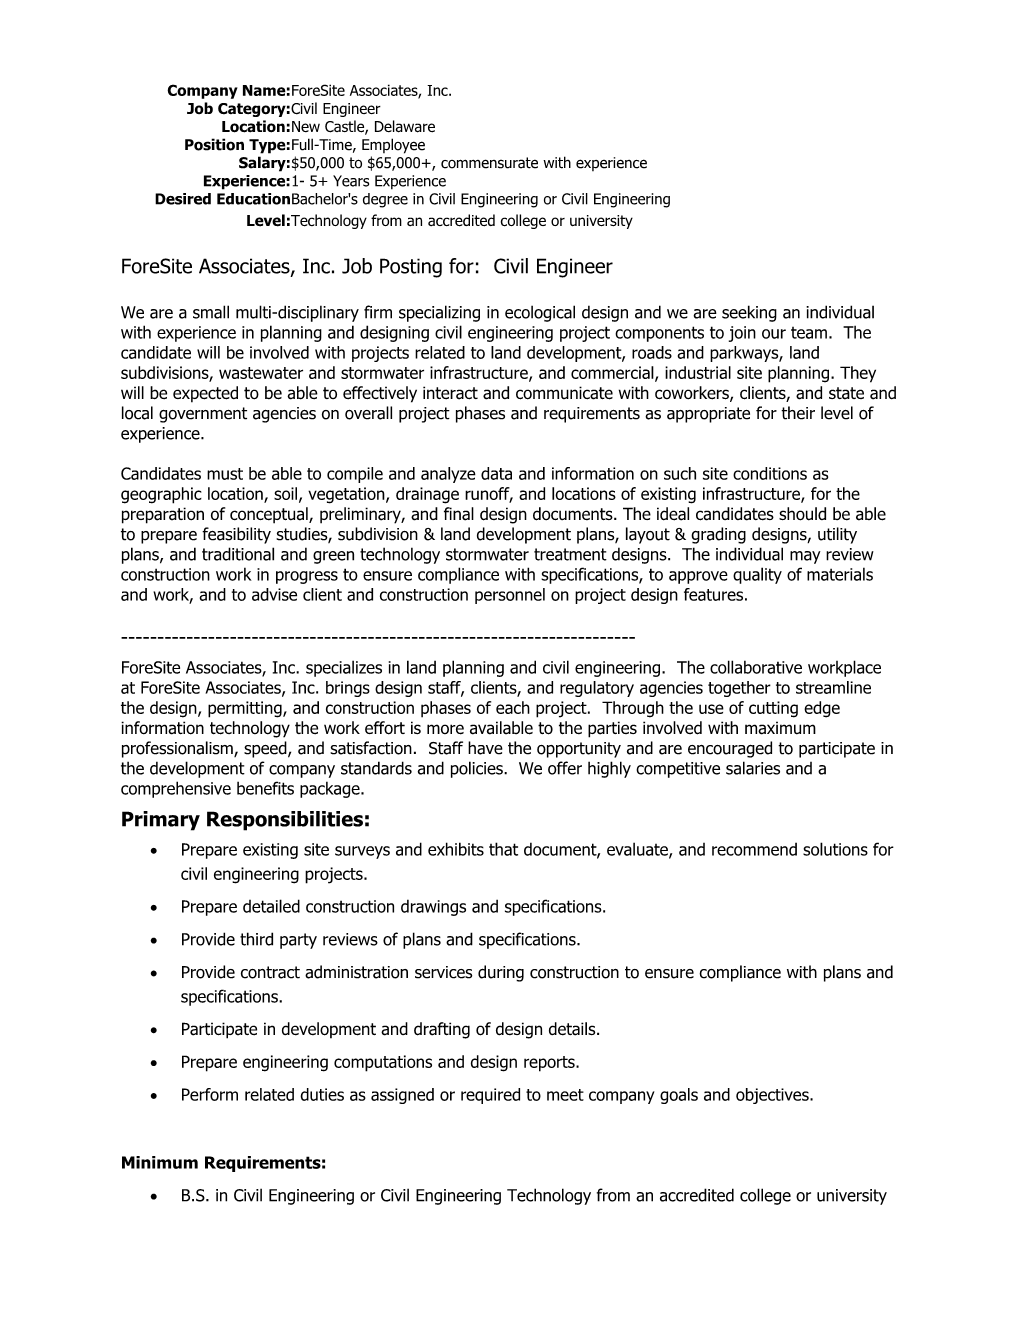 Foresite Associates, Inc. Job Posting For:Civil Engineer